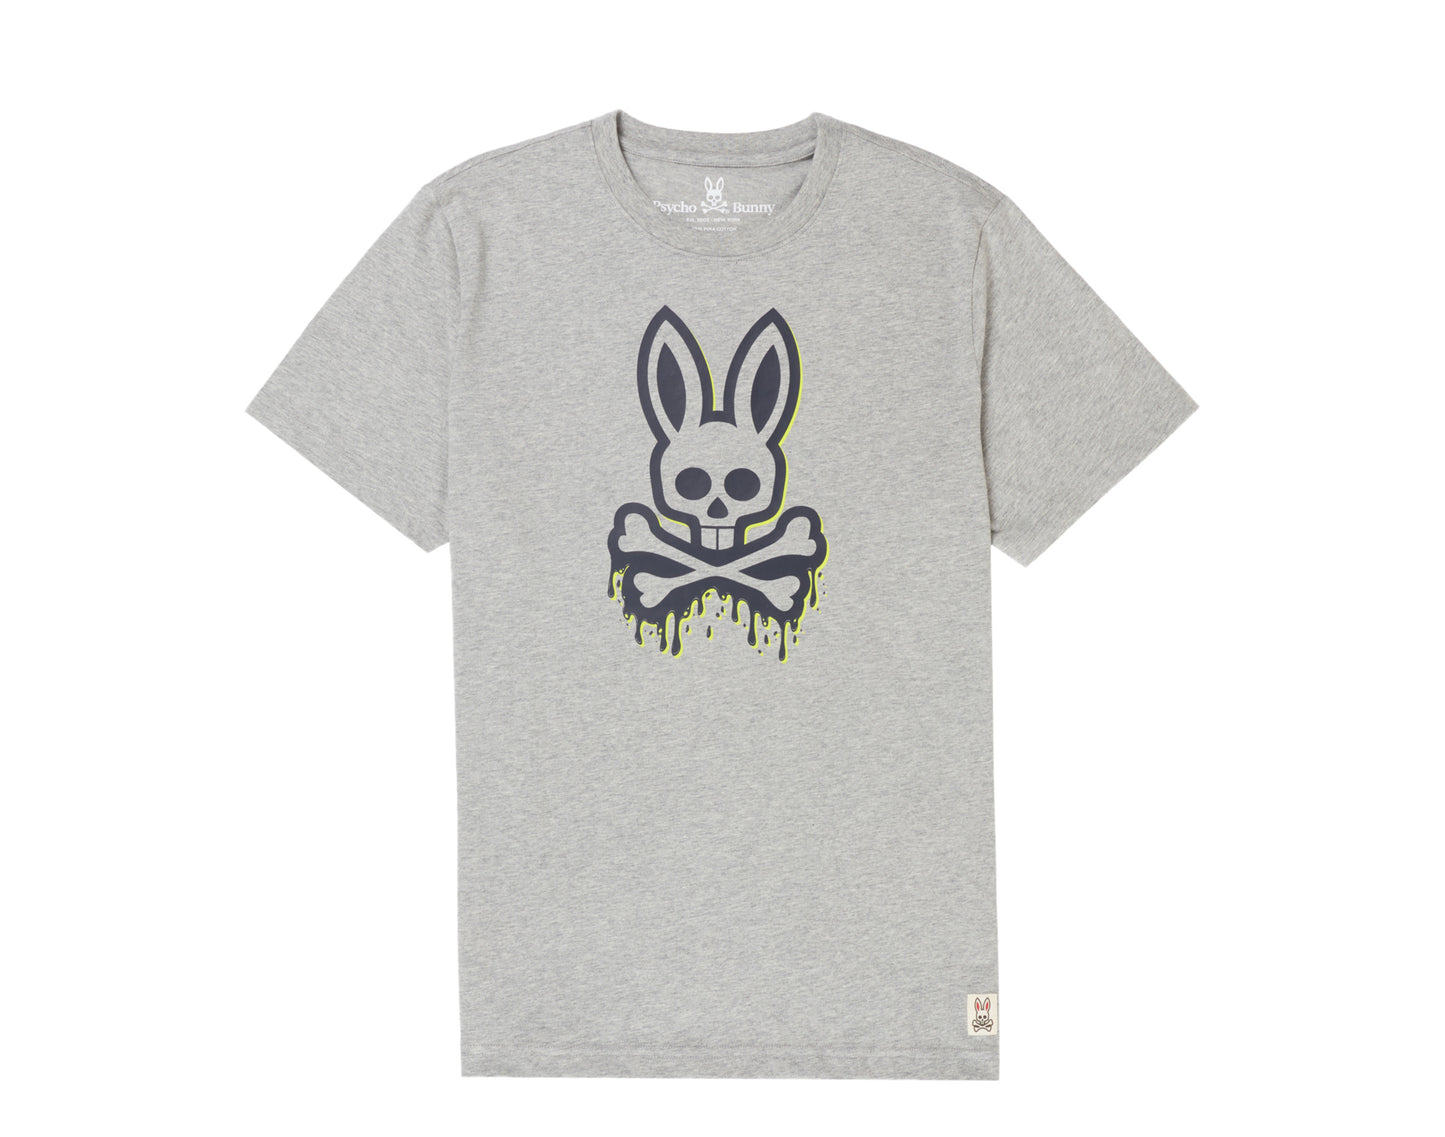 Psycho Bunny Portland Graphic Men's Tee Shirt